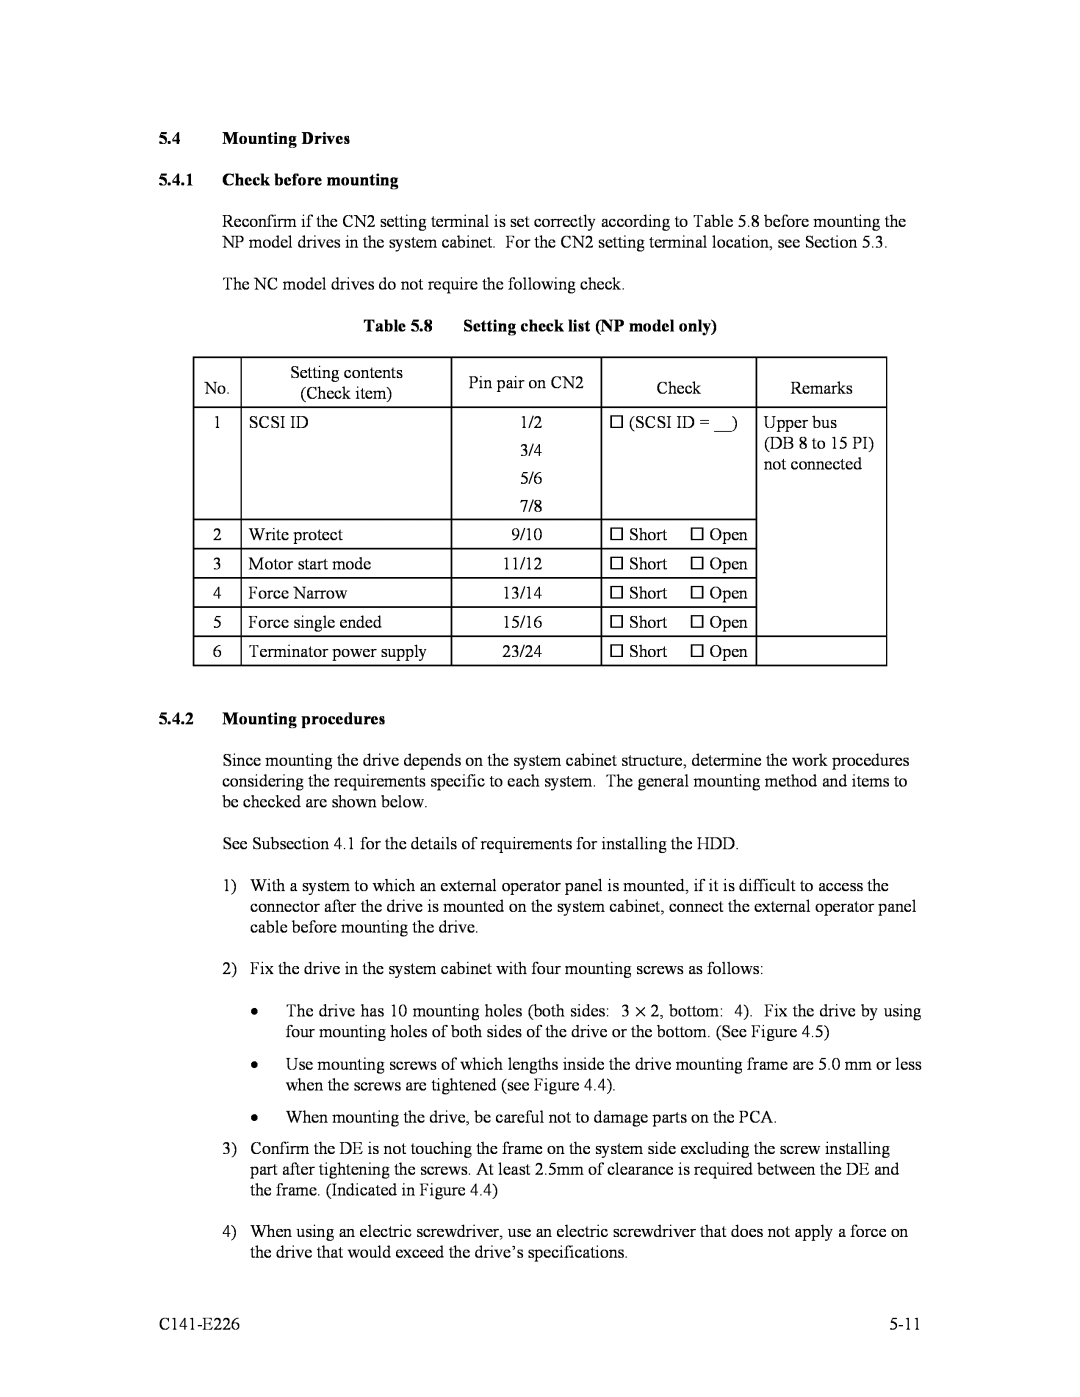 Fujitsu MAW3147NC/NP Mounting Drives 5.4.1 Check before mounting, Setting check list NP model only, Mounting procedures 